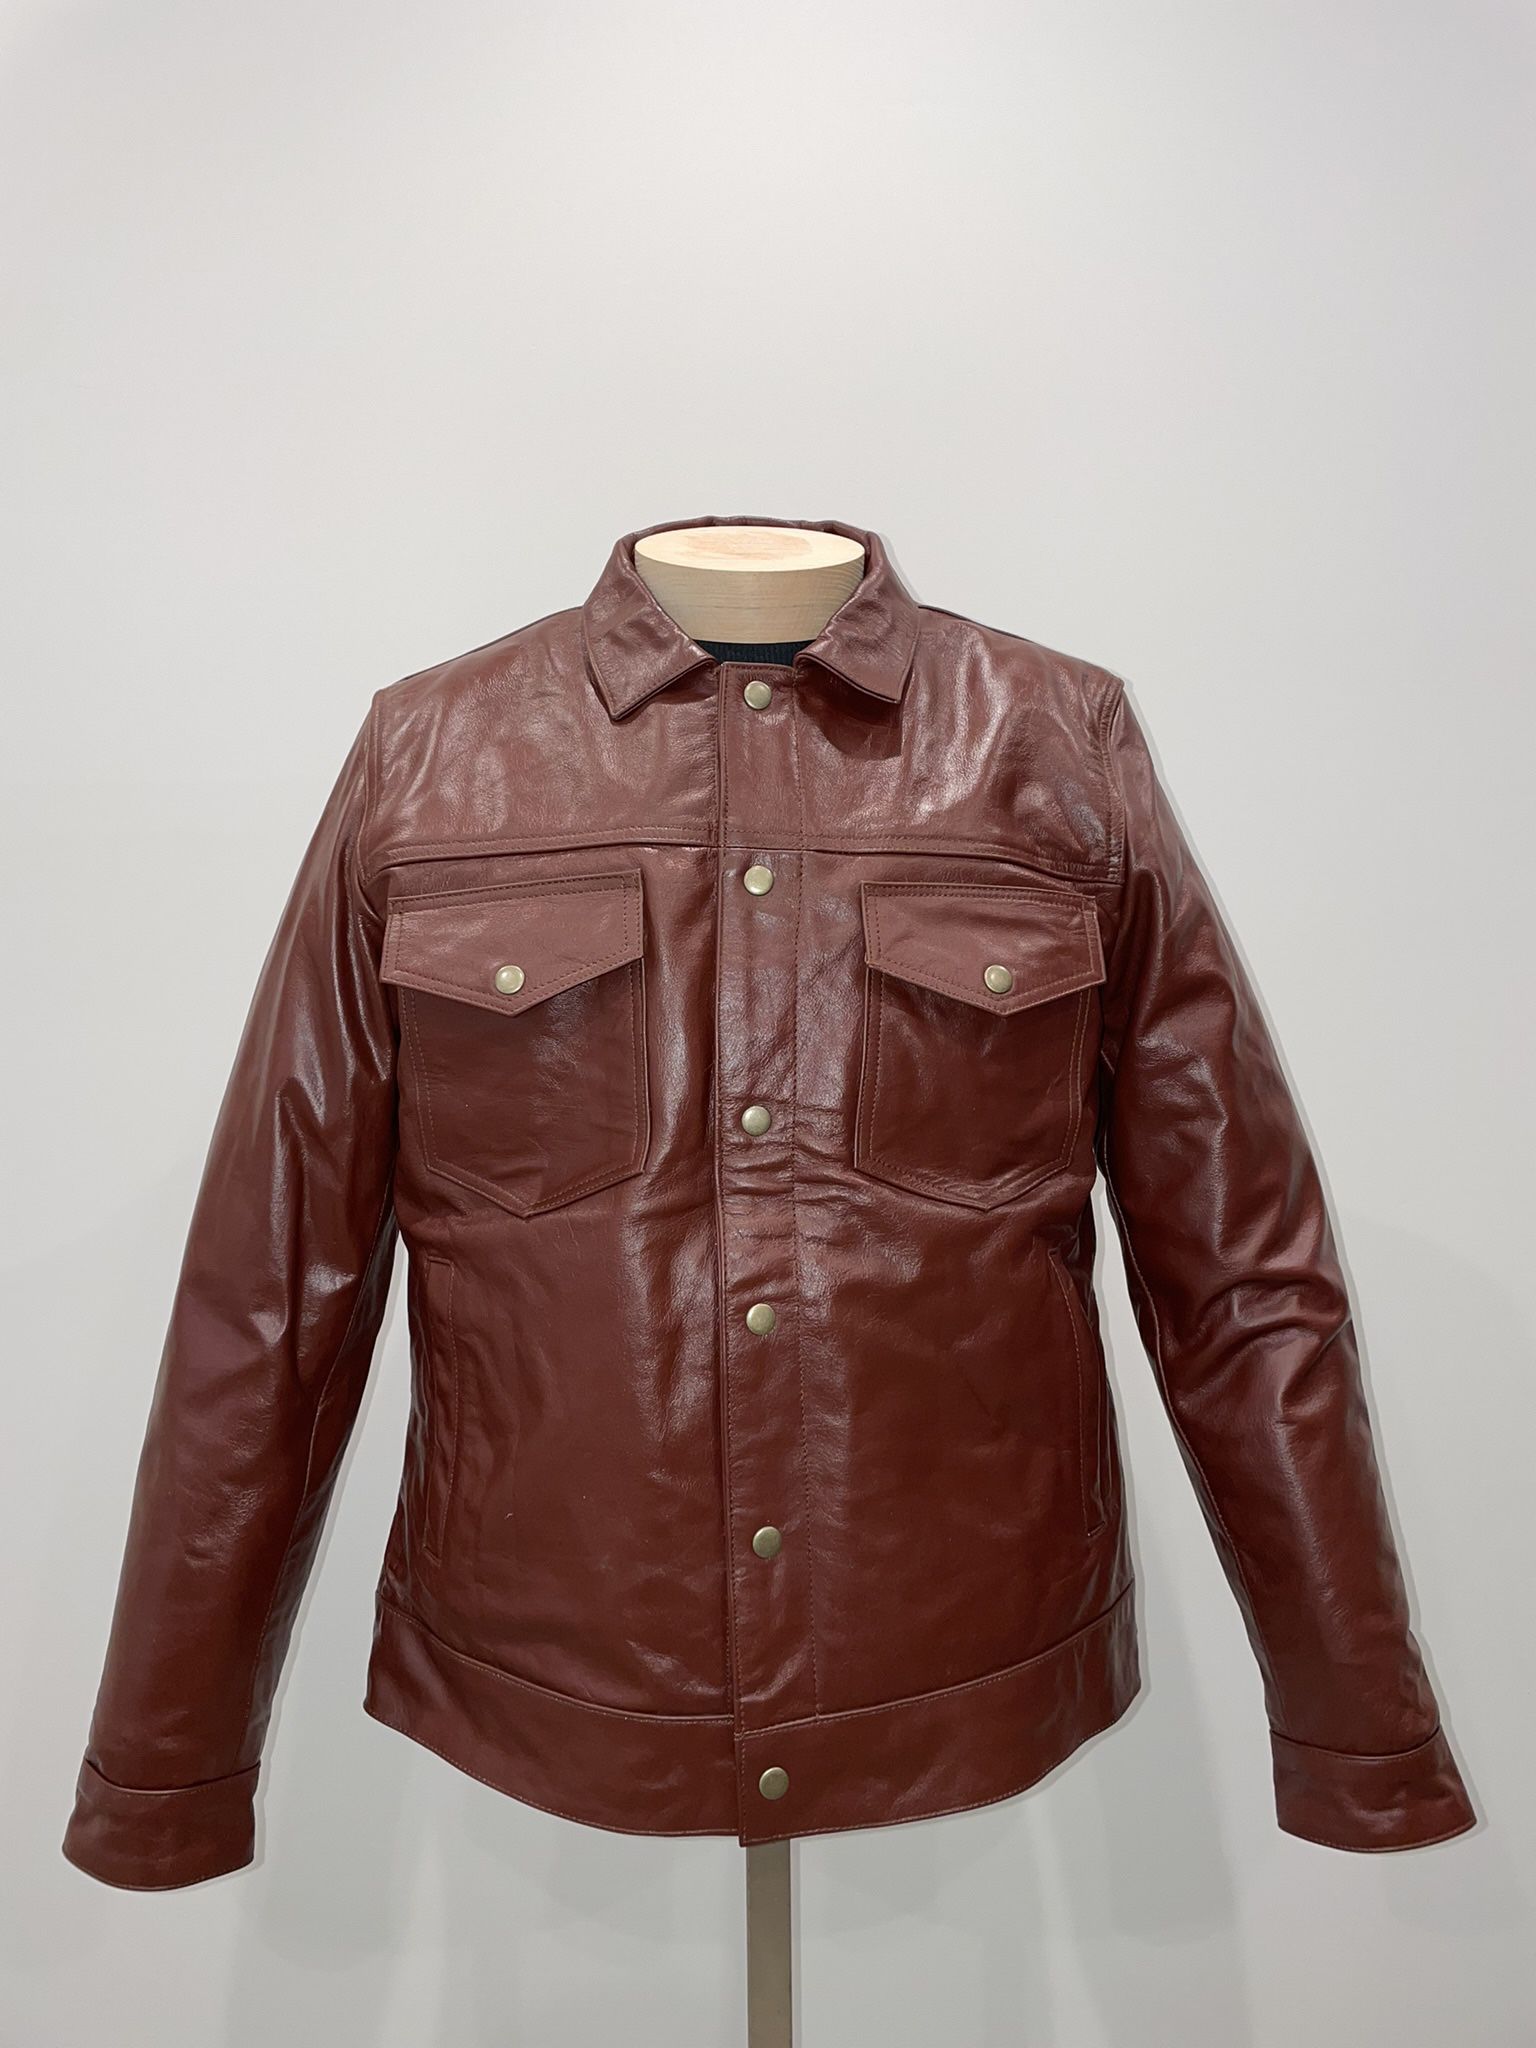 Trucker Jacket Burgundy Full Grain Leather Size: M, L, XL